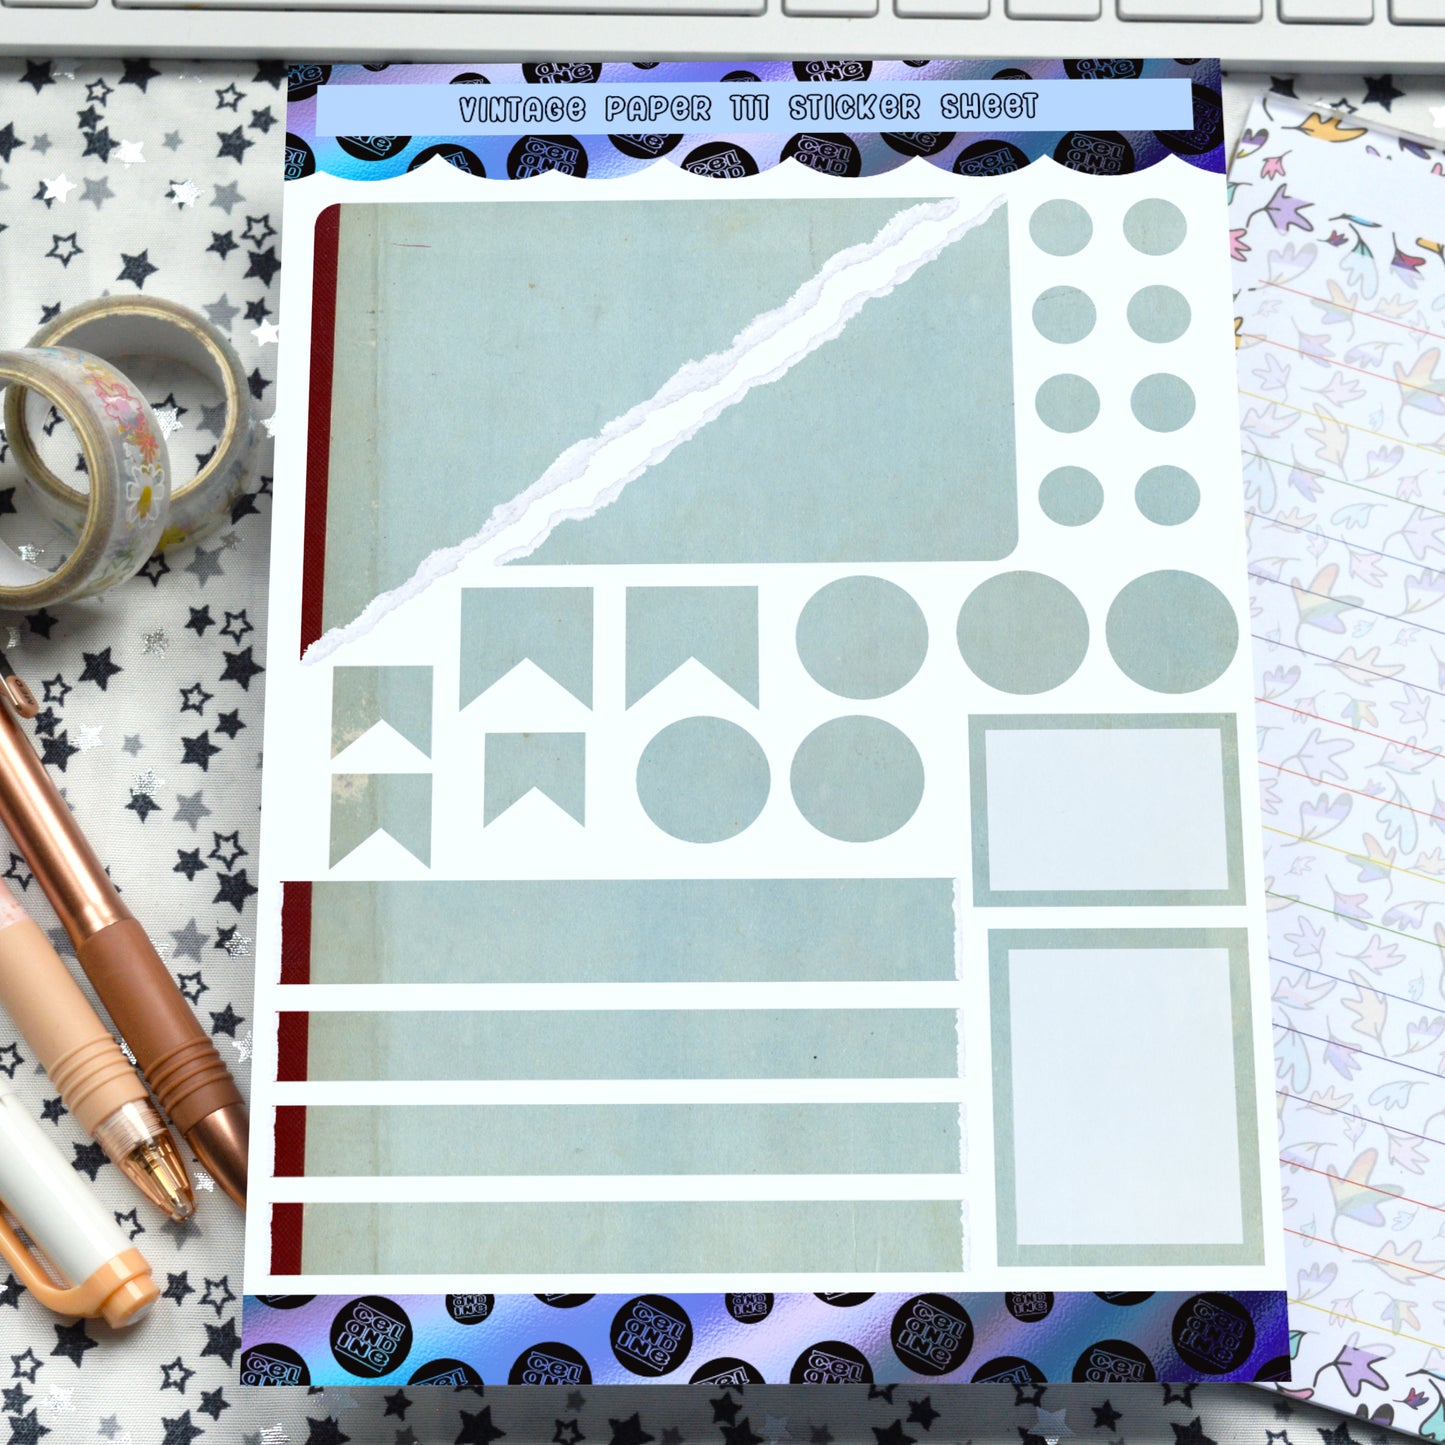 Decorative Planner Sticker Sheet | Art Journal | Junk Journal | Bullet Journal | Vintage Book Cover Design (Light Blue-Green with burgundy edge)